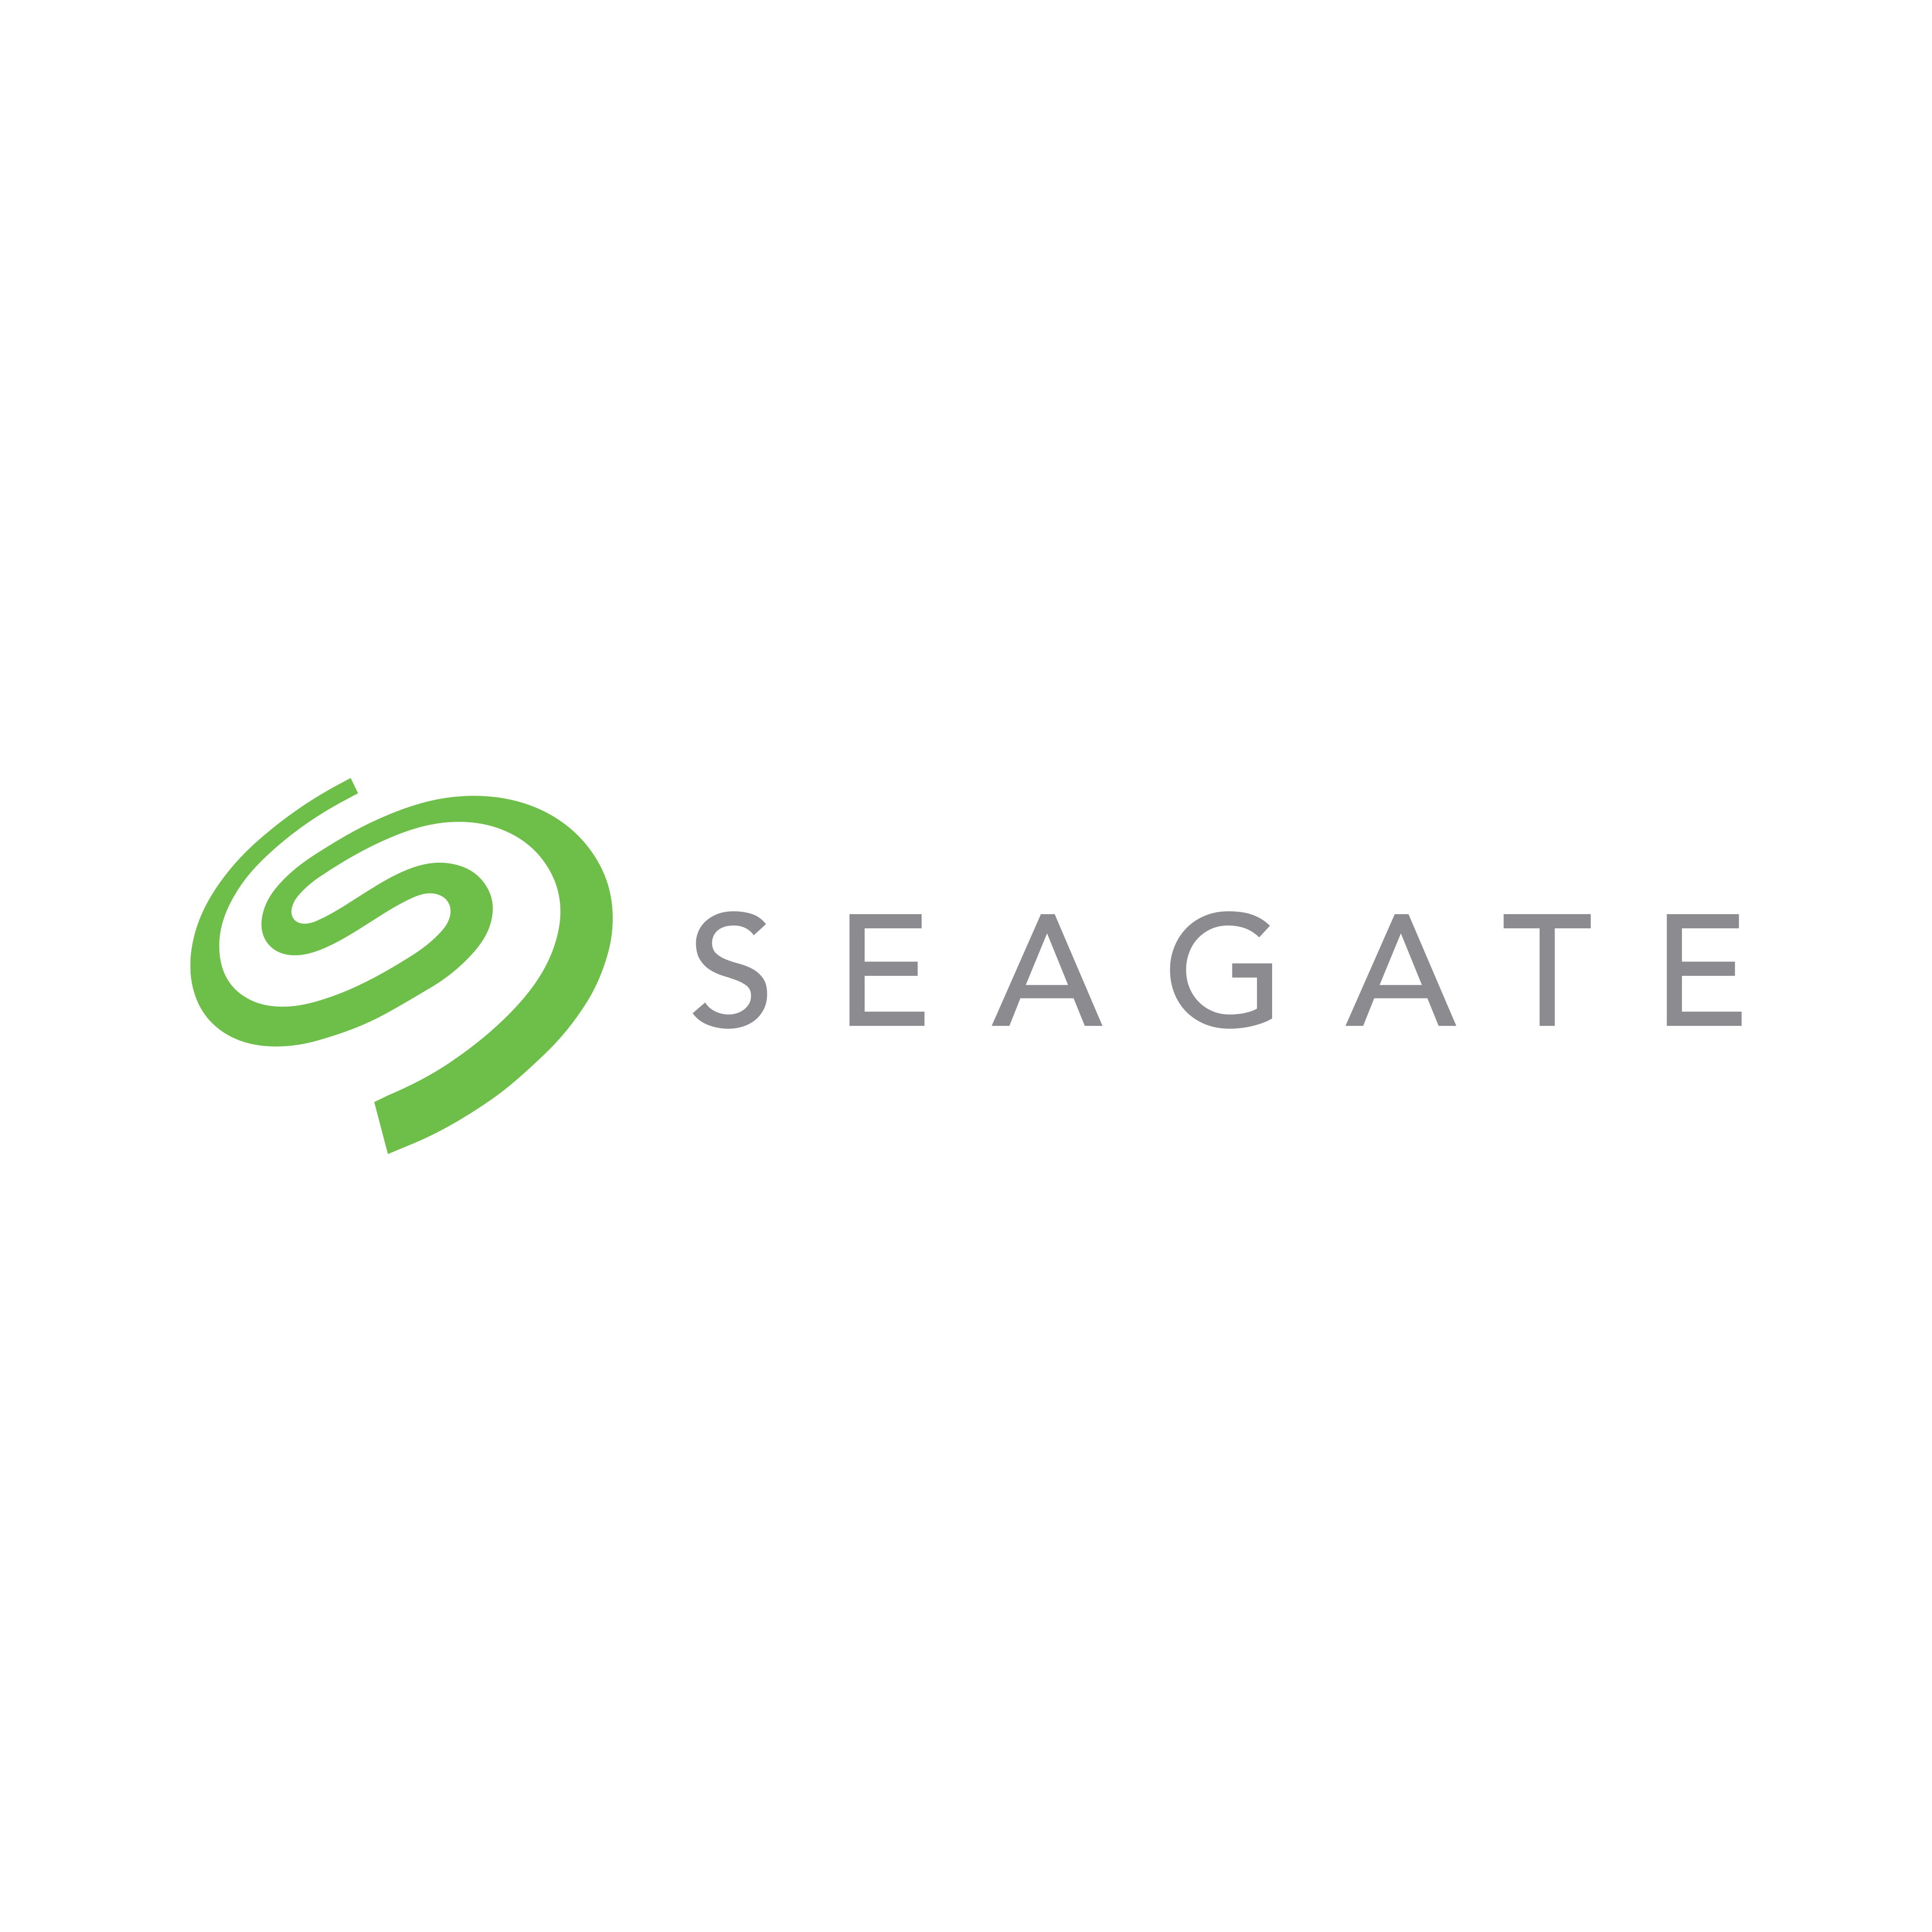 seagate logo 0 - Seagate Logo